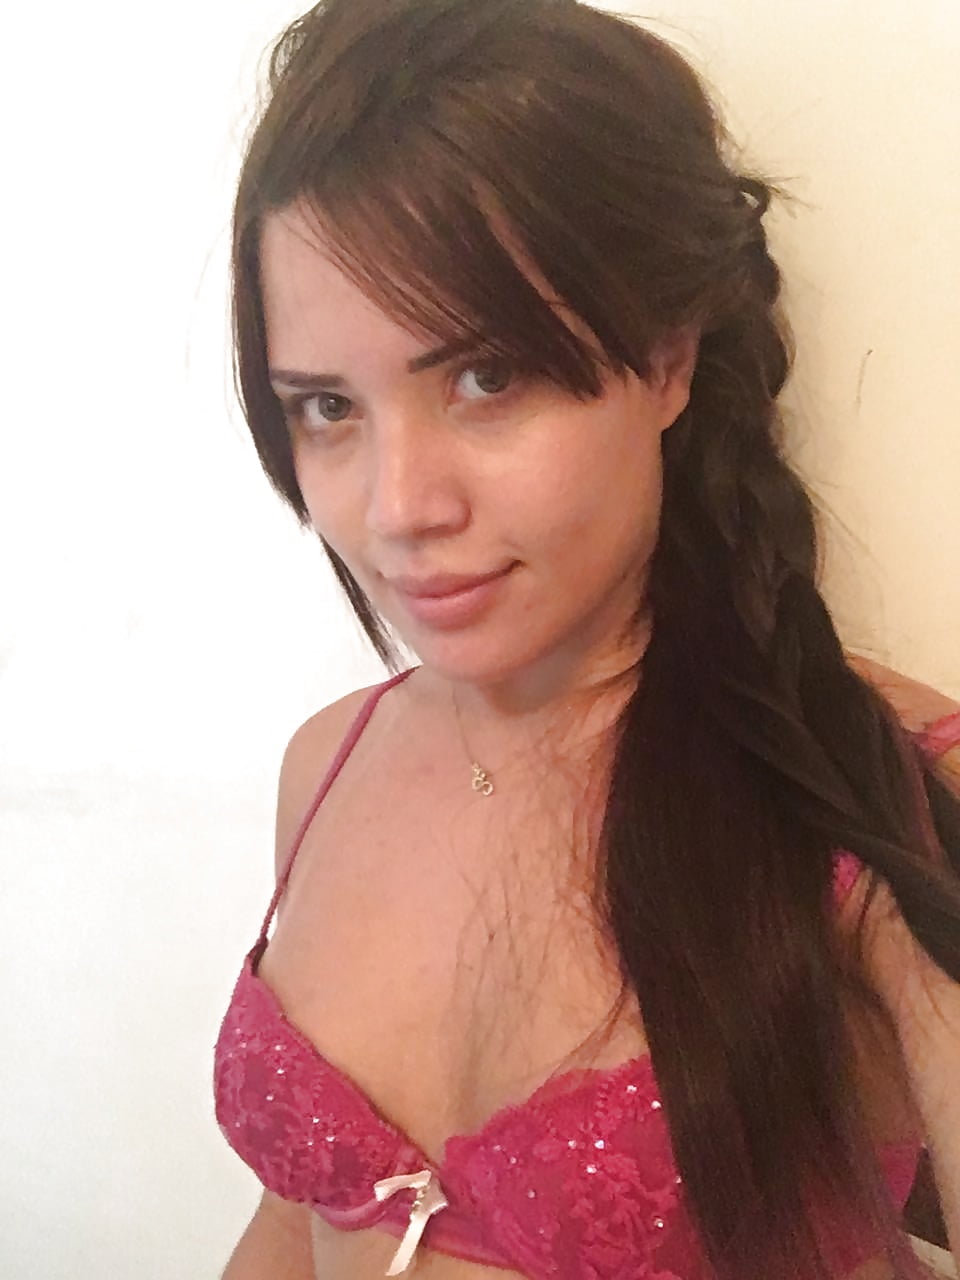 Nudes da atriz pornô brasileira Yasmin Mineira